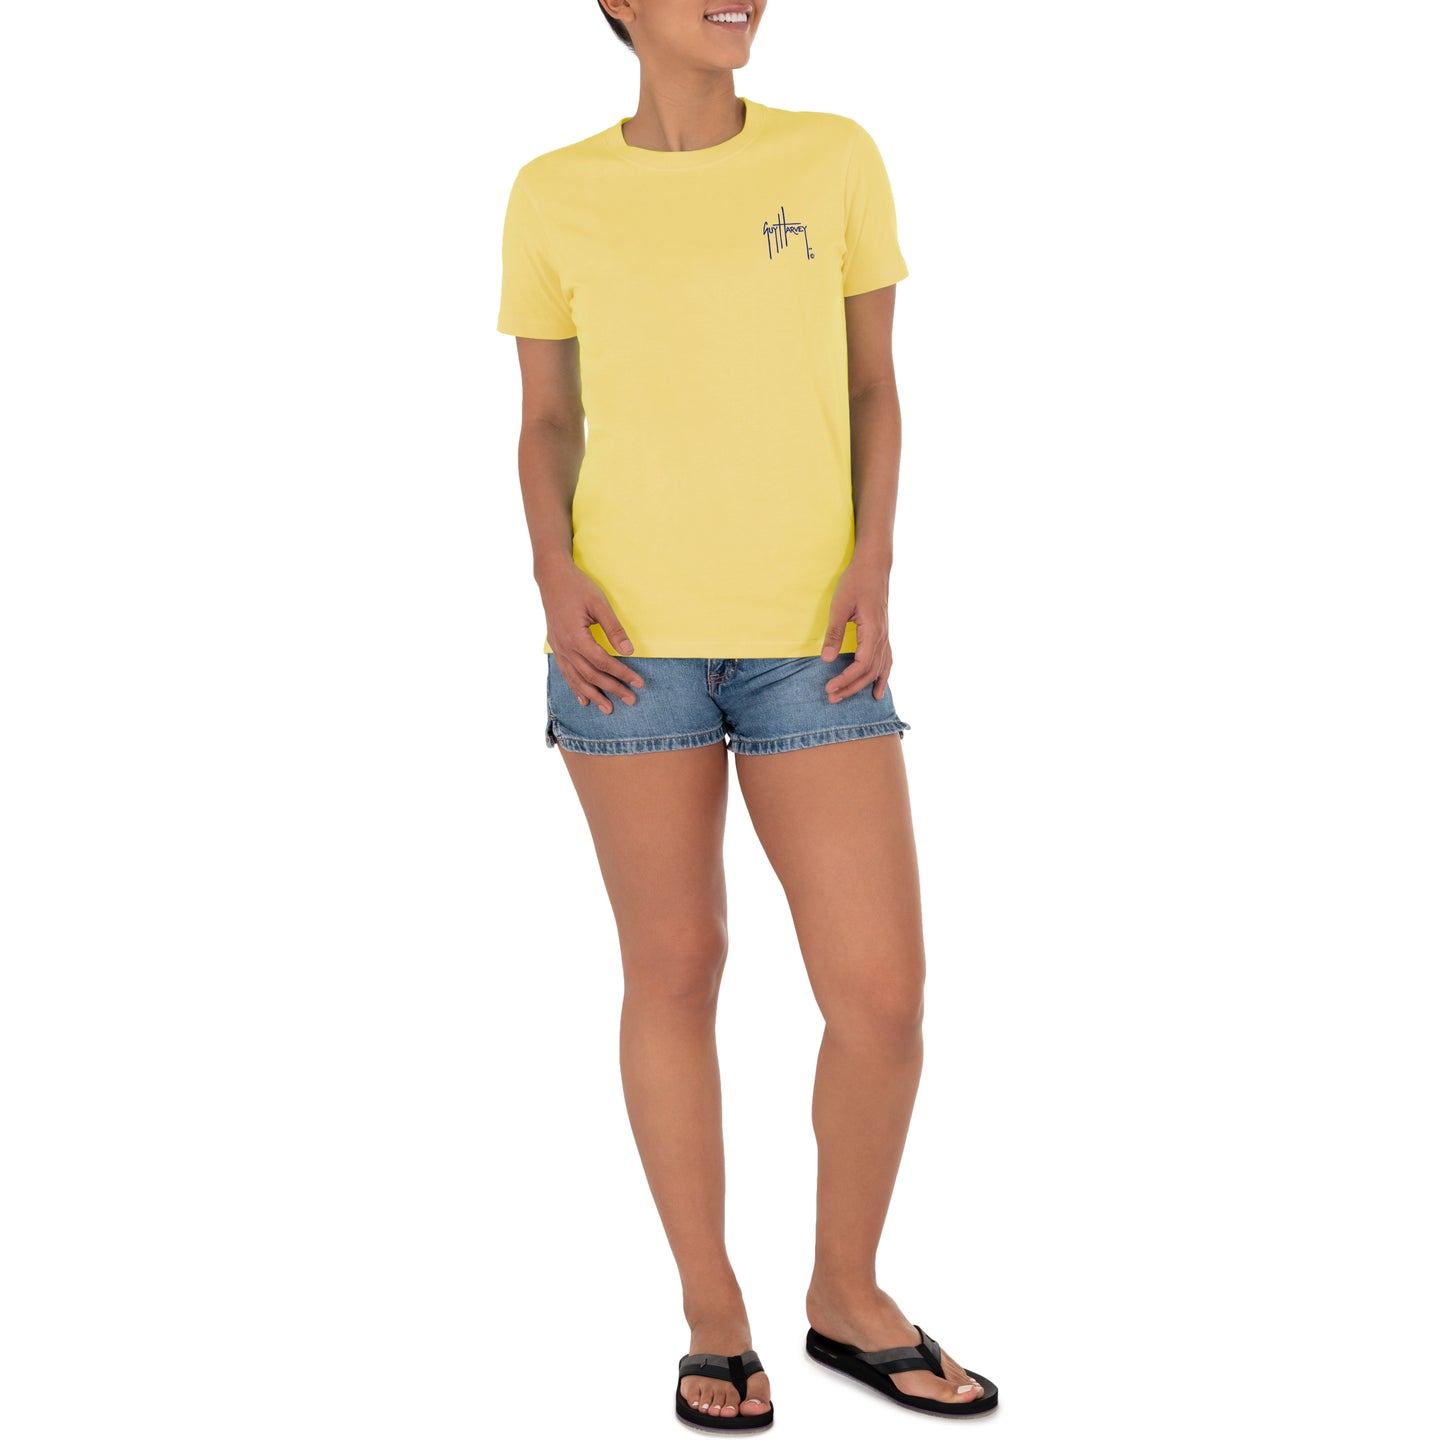 Ladies Tropic Short Sleeve Yellow T-Shirt View 4